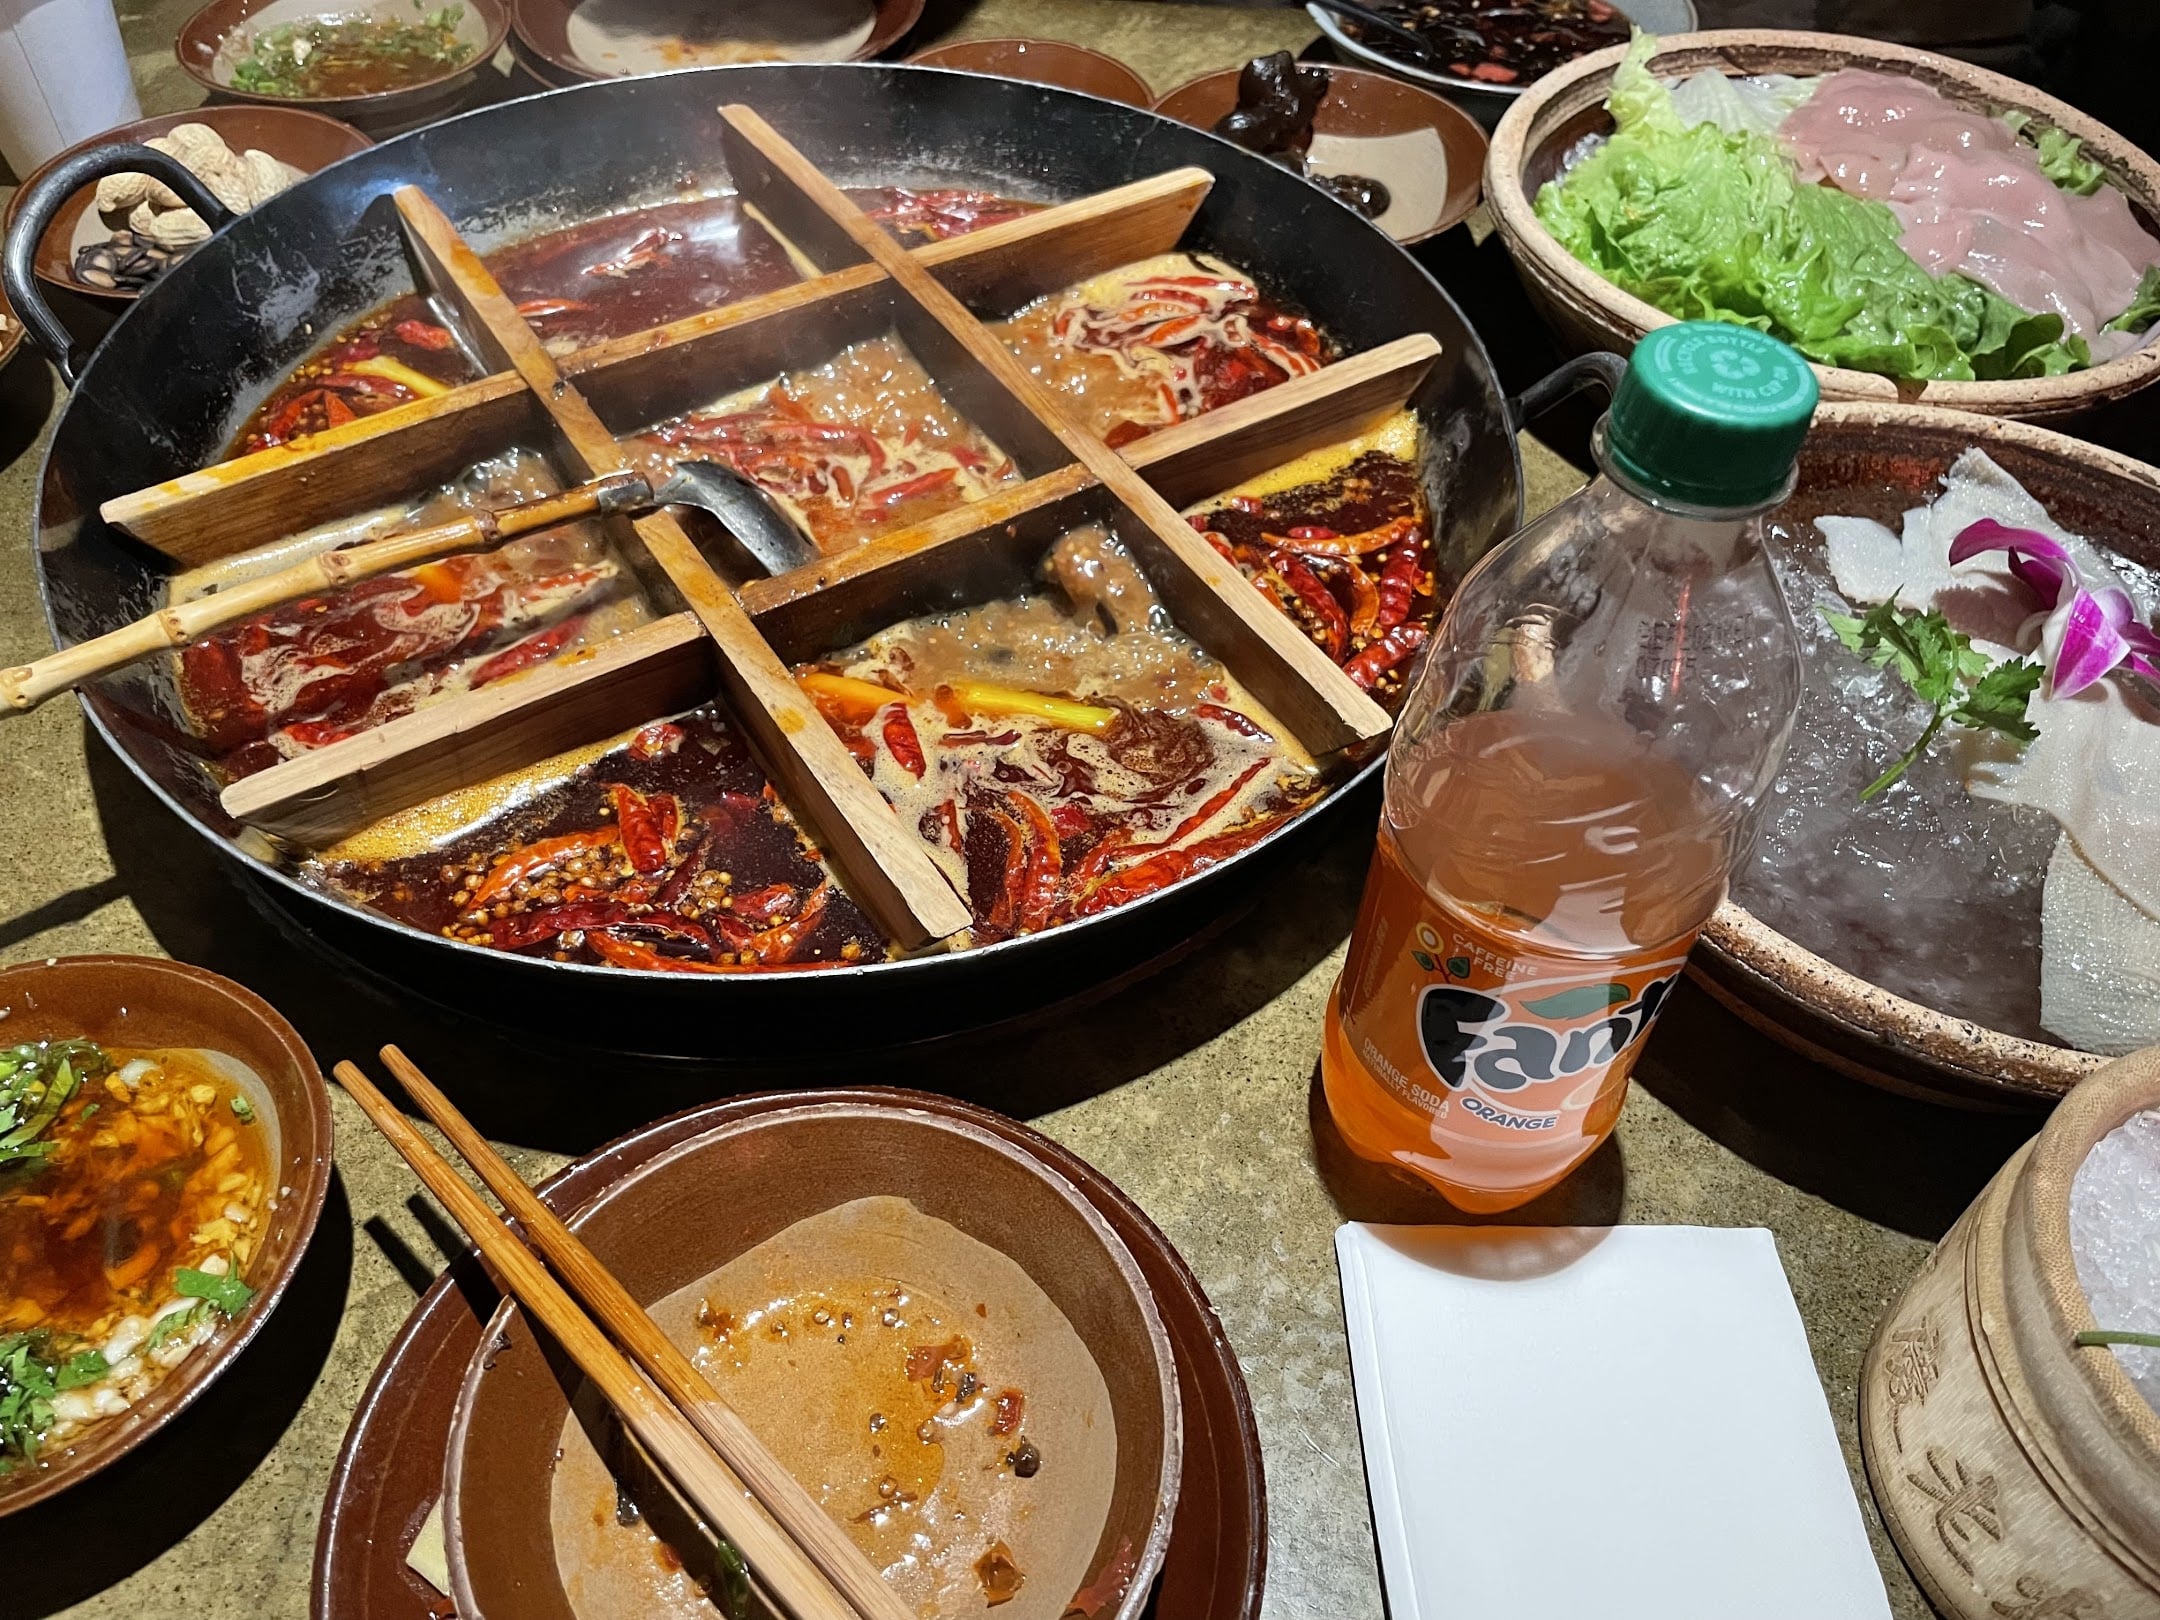 Sichuan-Style Hot Pot Recipe - How to Make Sichuan Hot Pot at Home